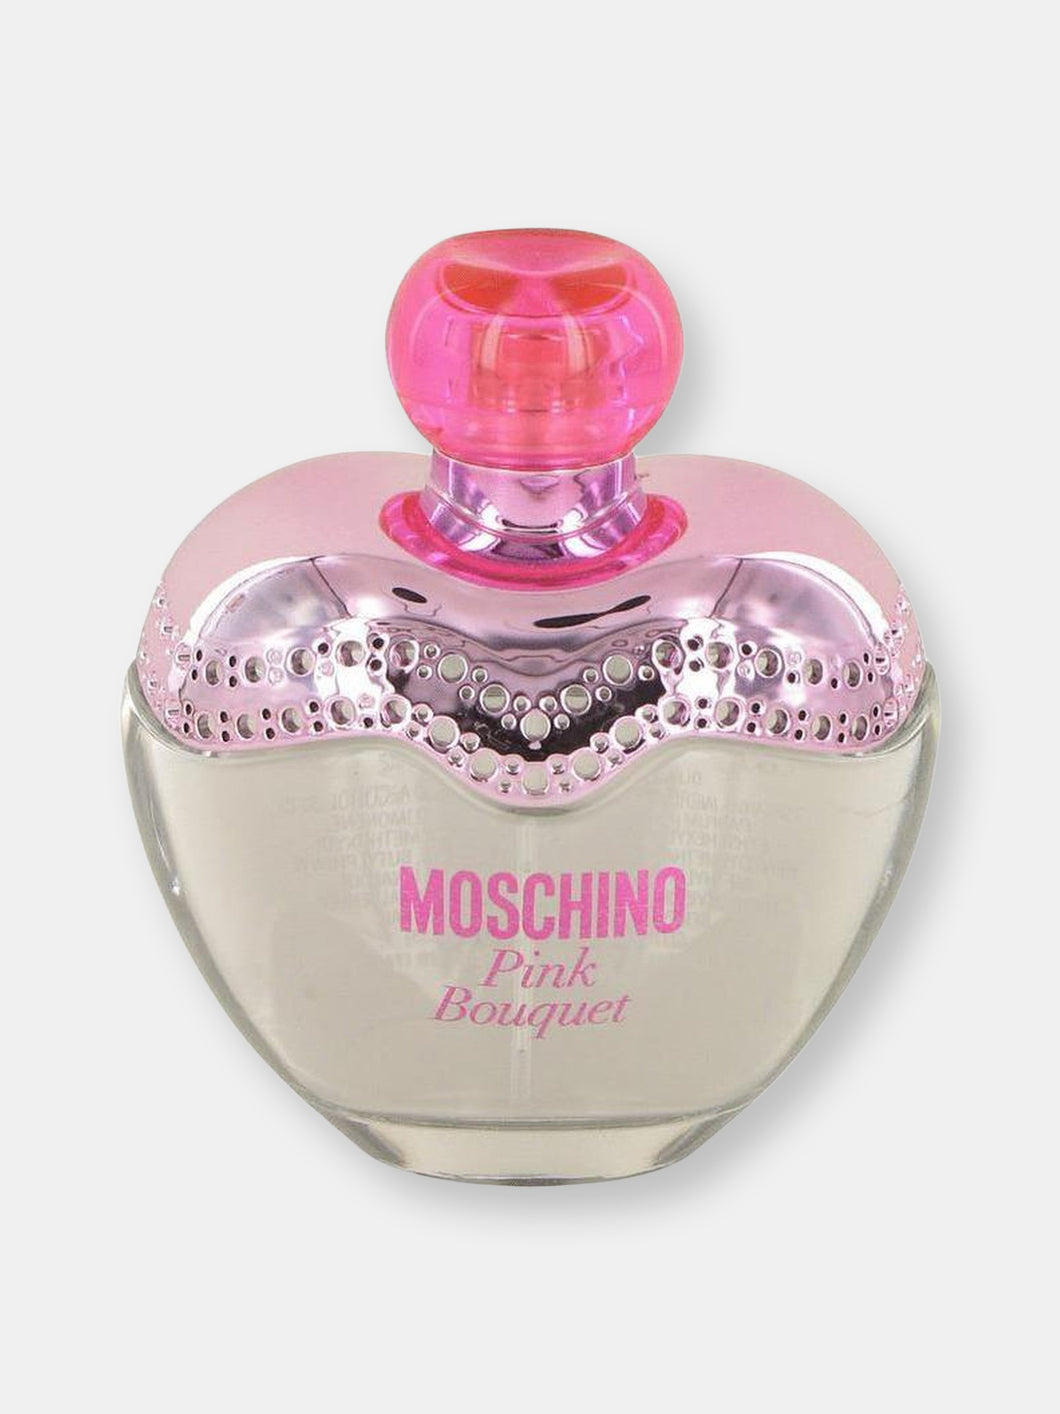 Moschino Pink Bouquet by Moschino Eau De Toilette Spray (Tester) 3.4 oz